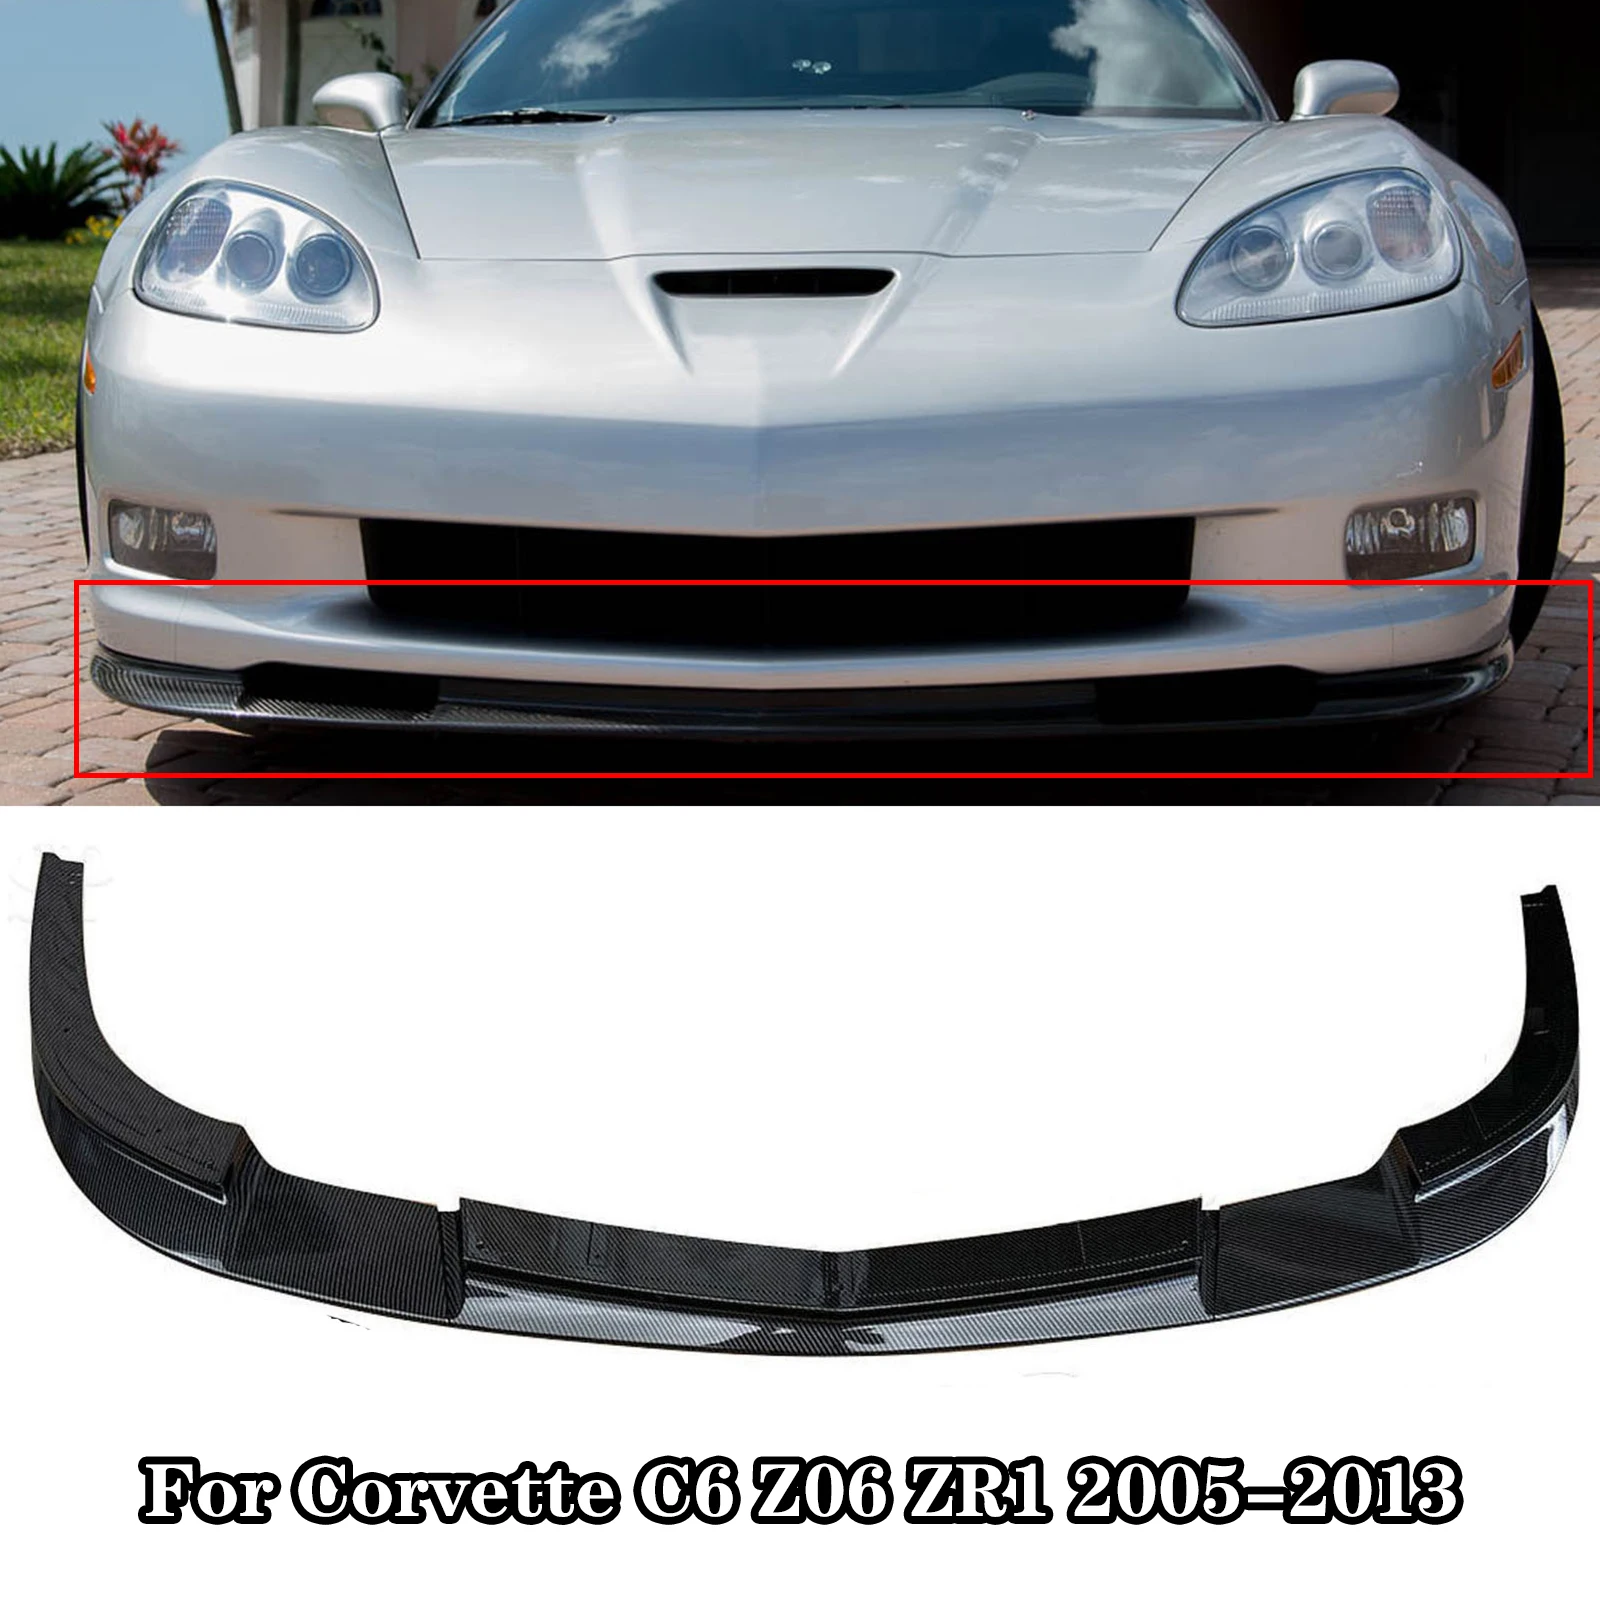 

For Chevrolet Corvette C6 Z06 Zr1 2005-2013 Wide Body Version Front Bumper Lip Splitter Diffuser Spoiler Carbon Fiber Look